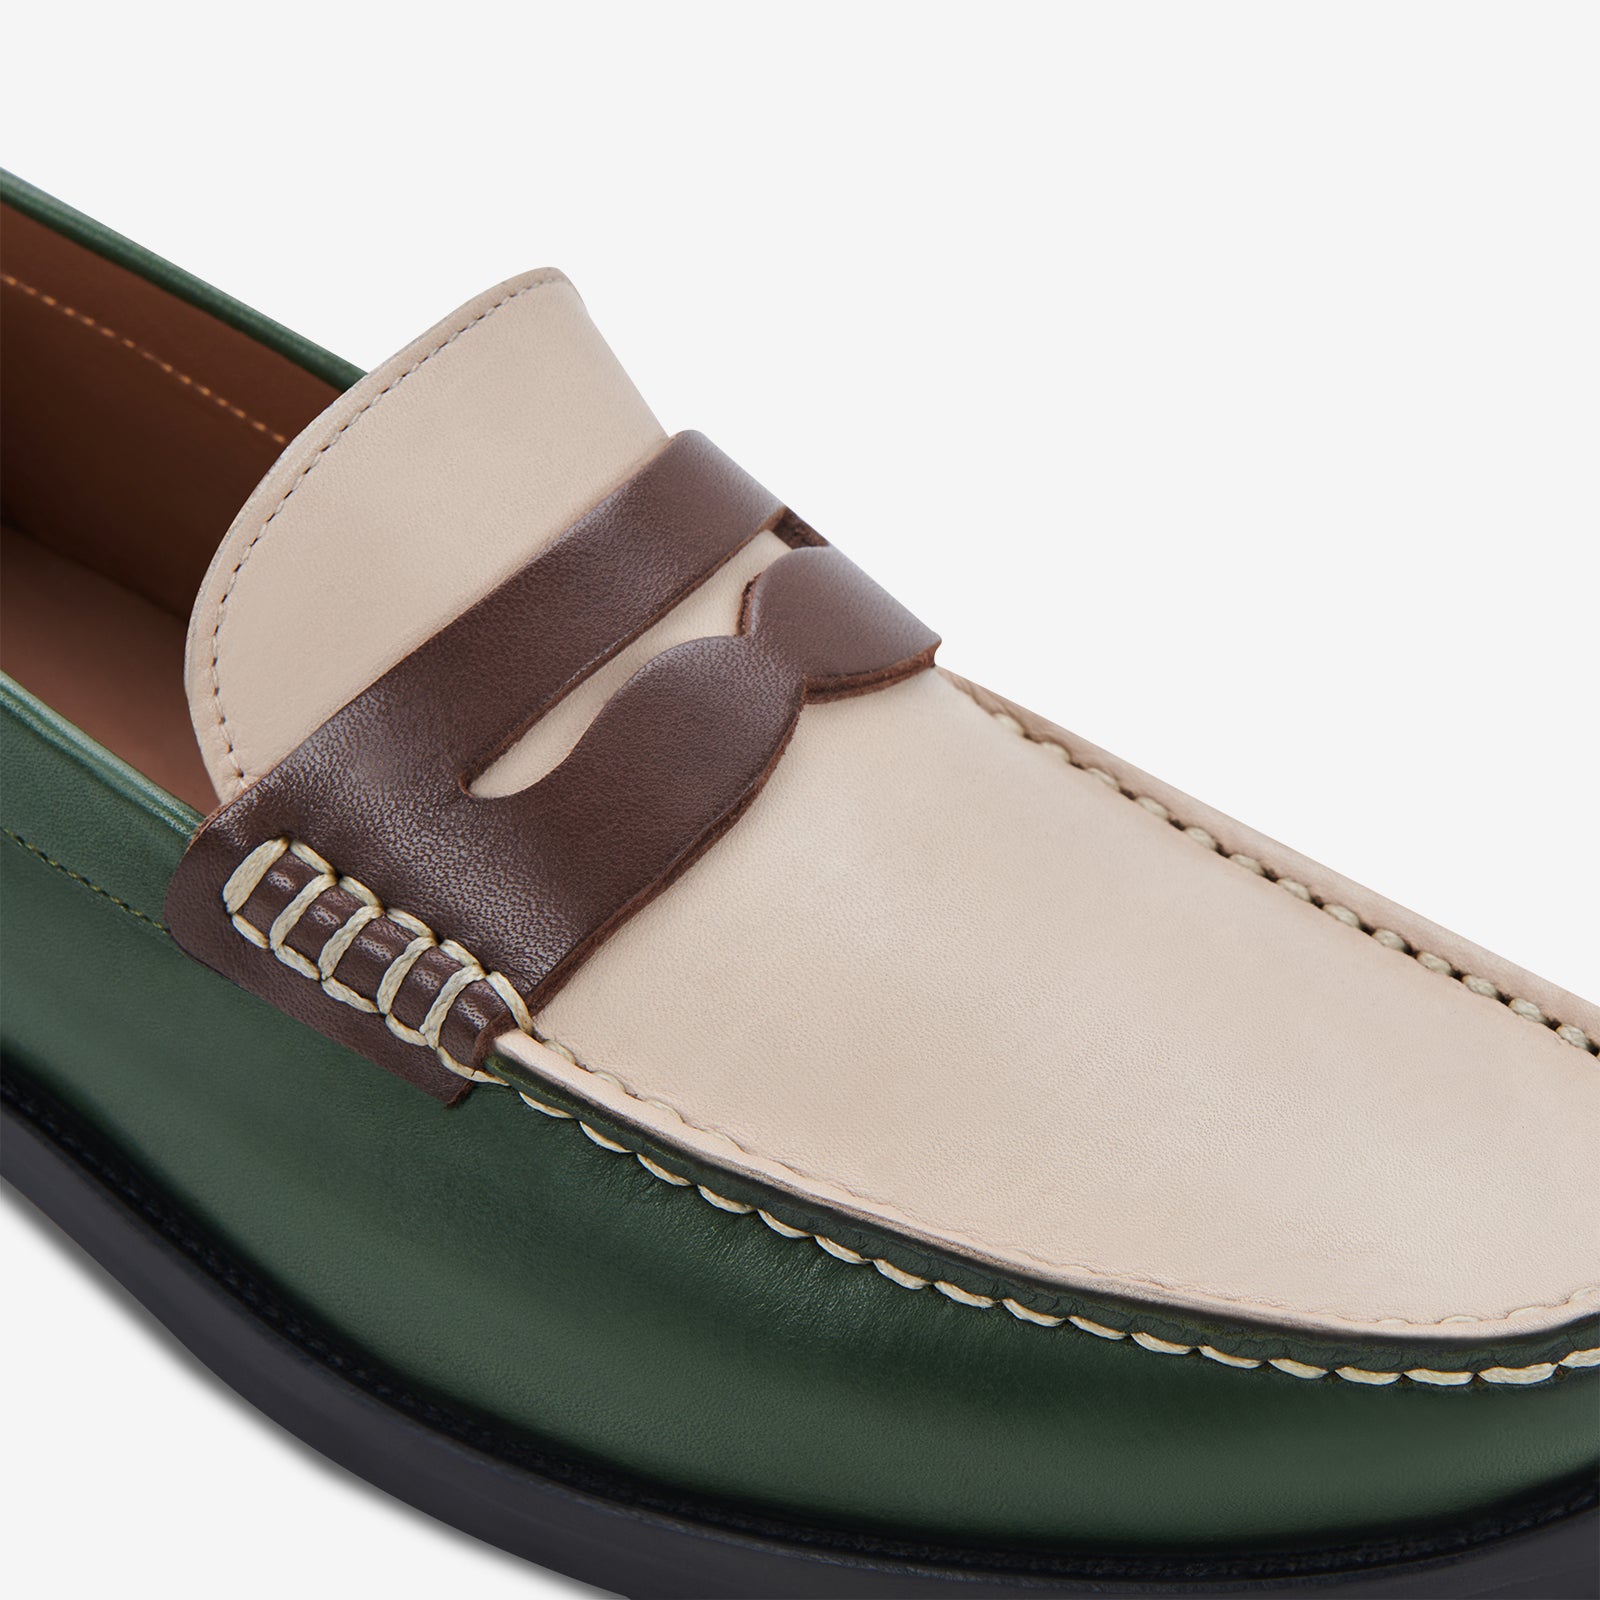 Greats - The Essex Penny Loafer - Cargo Multi - Men's Shoe – GREATS